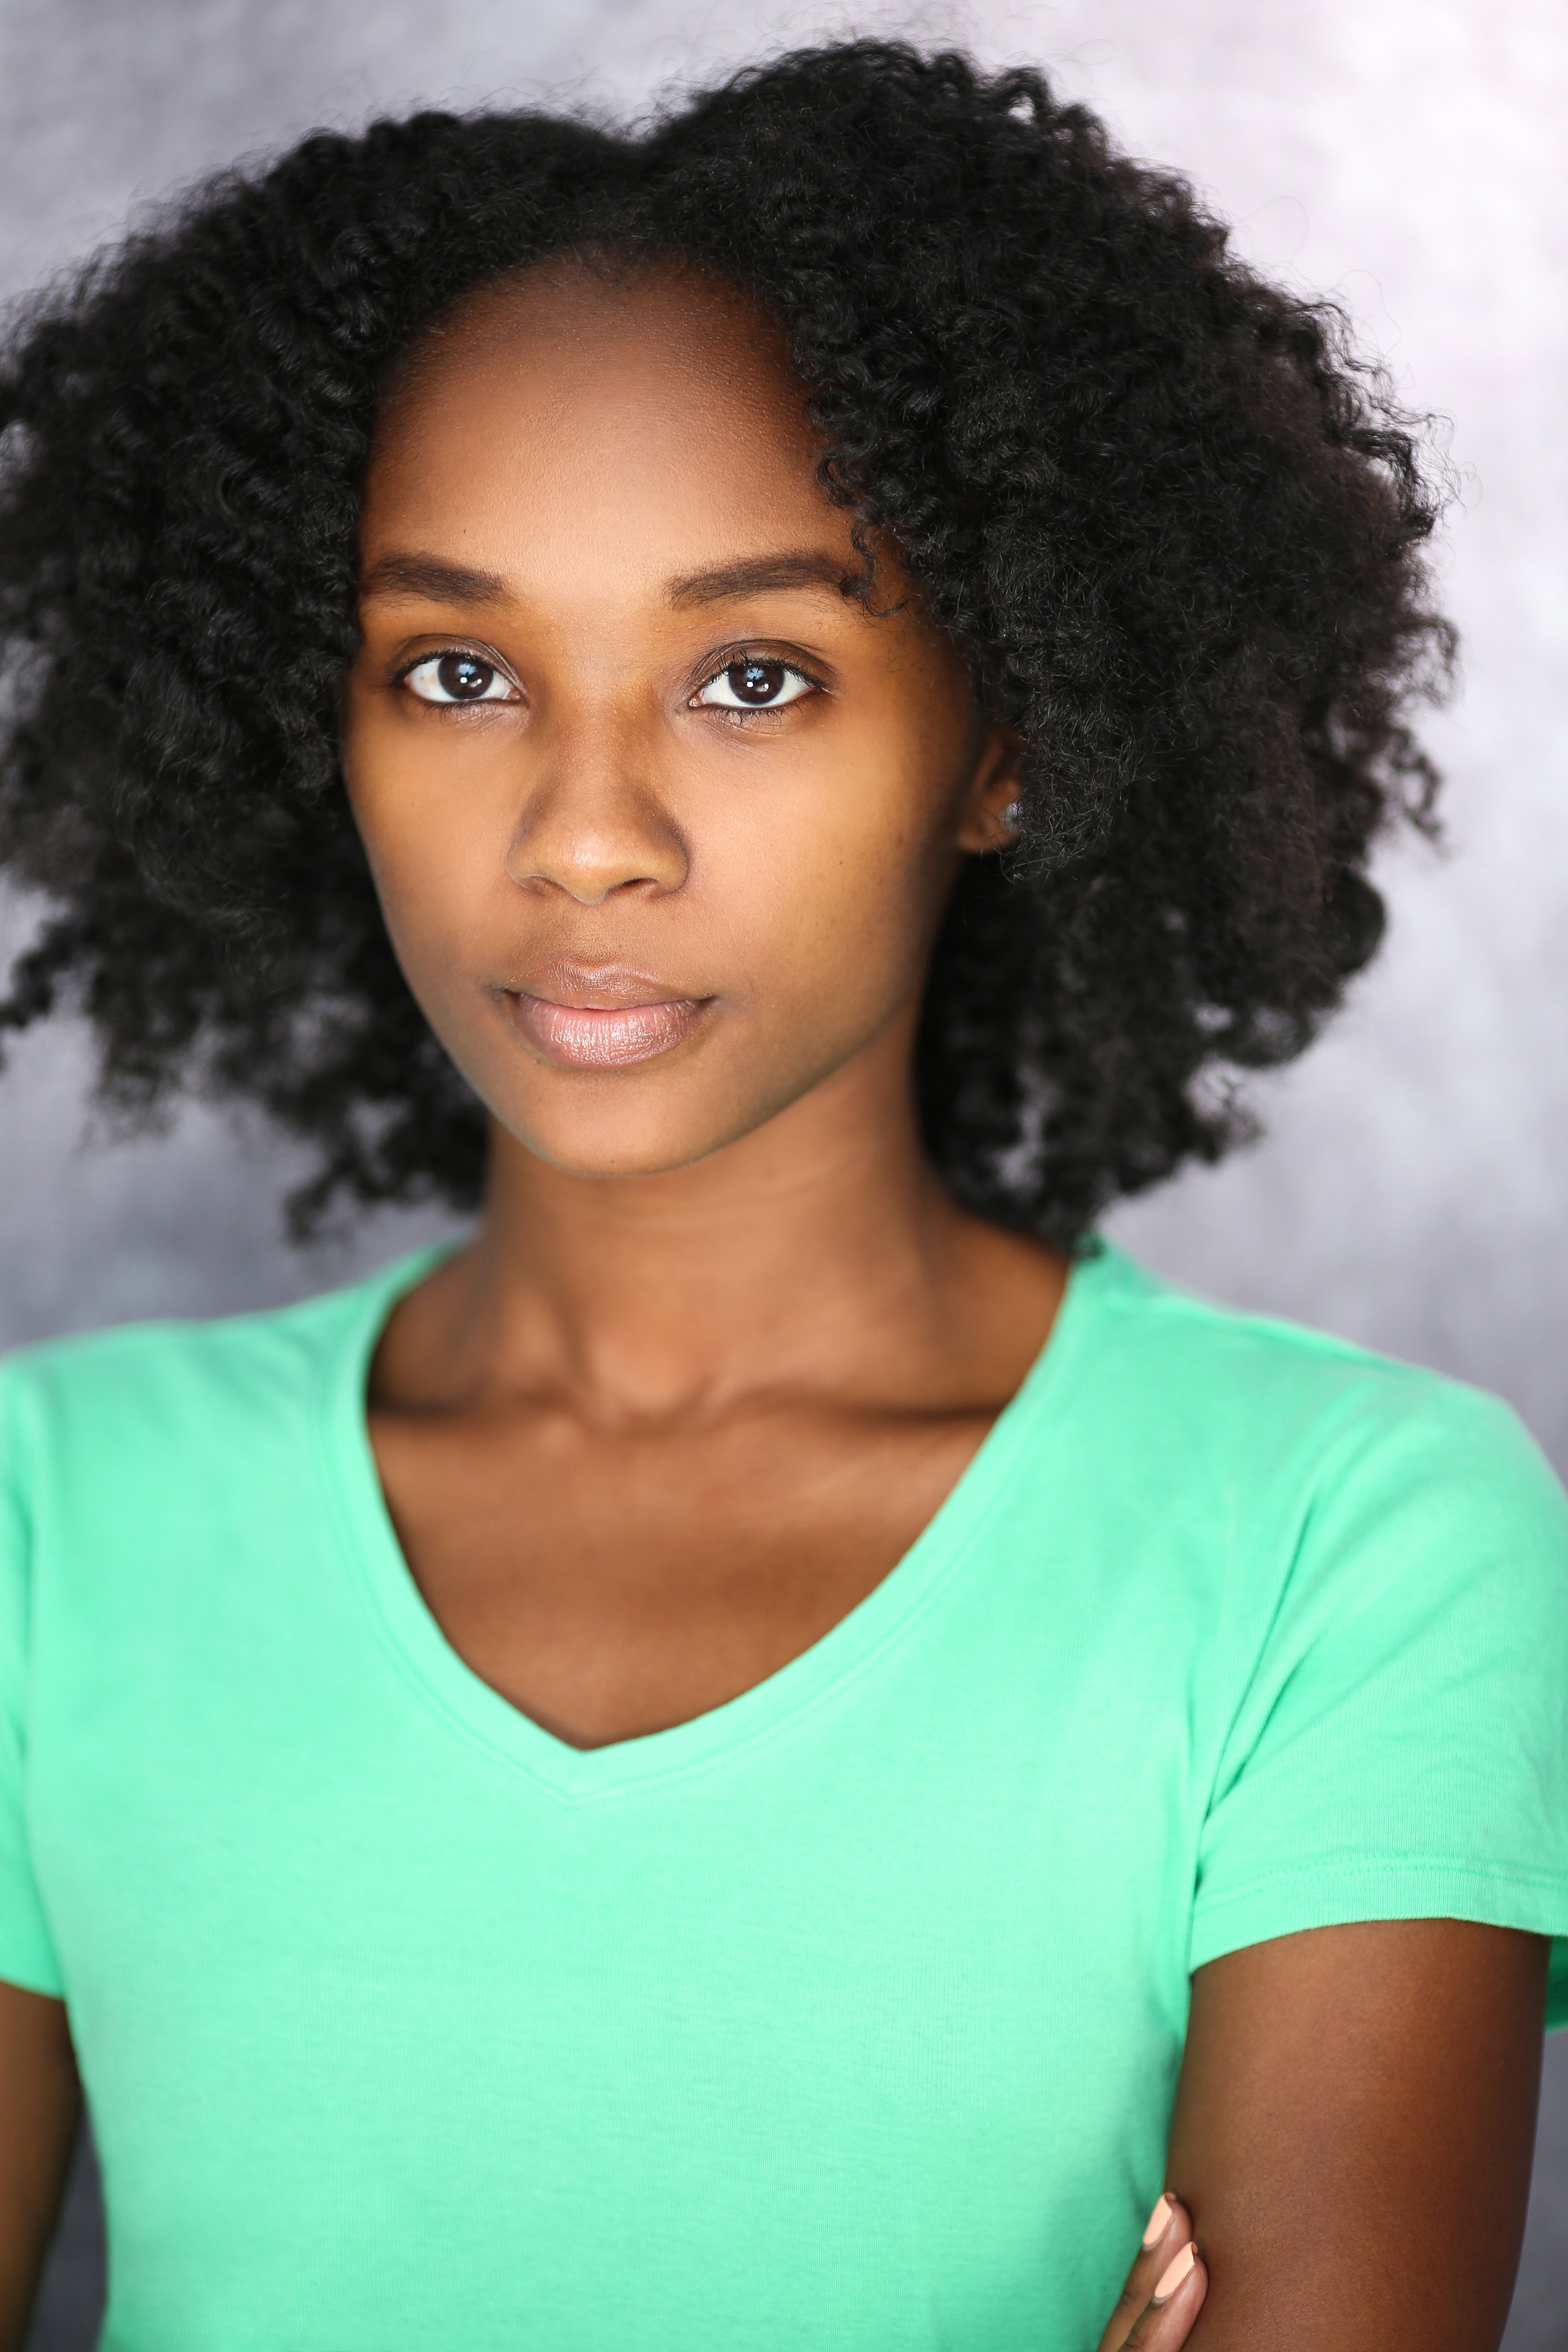 11 STRAIGHT HAIRSTYLE IDEAS FOR BLACK GIRLS | IG Baddie Hairstyles |  SimplyBriannaB - YouTube